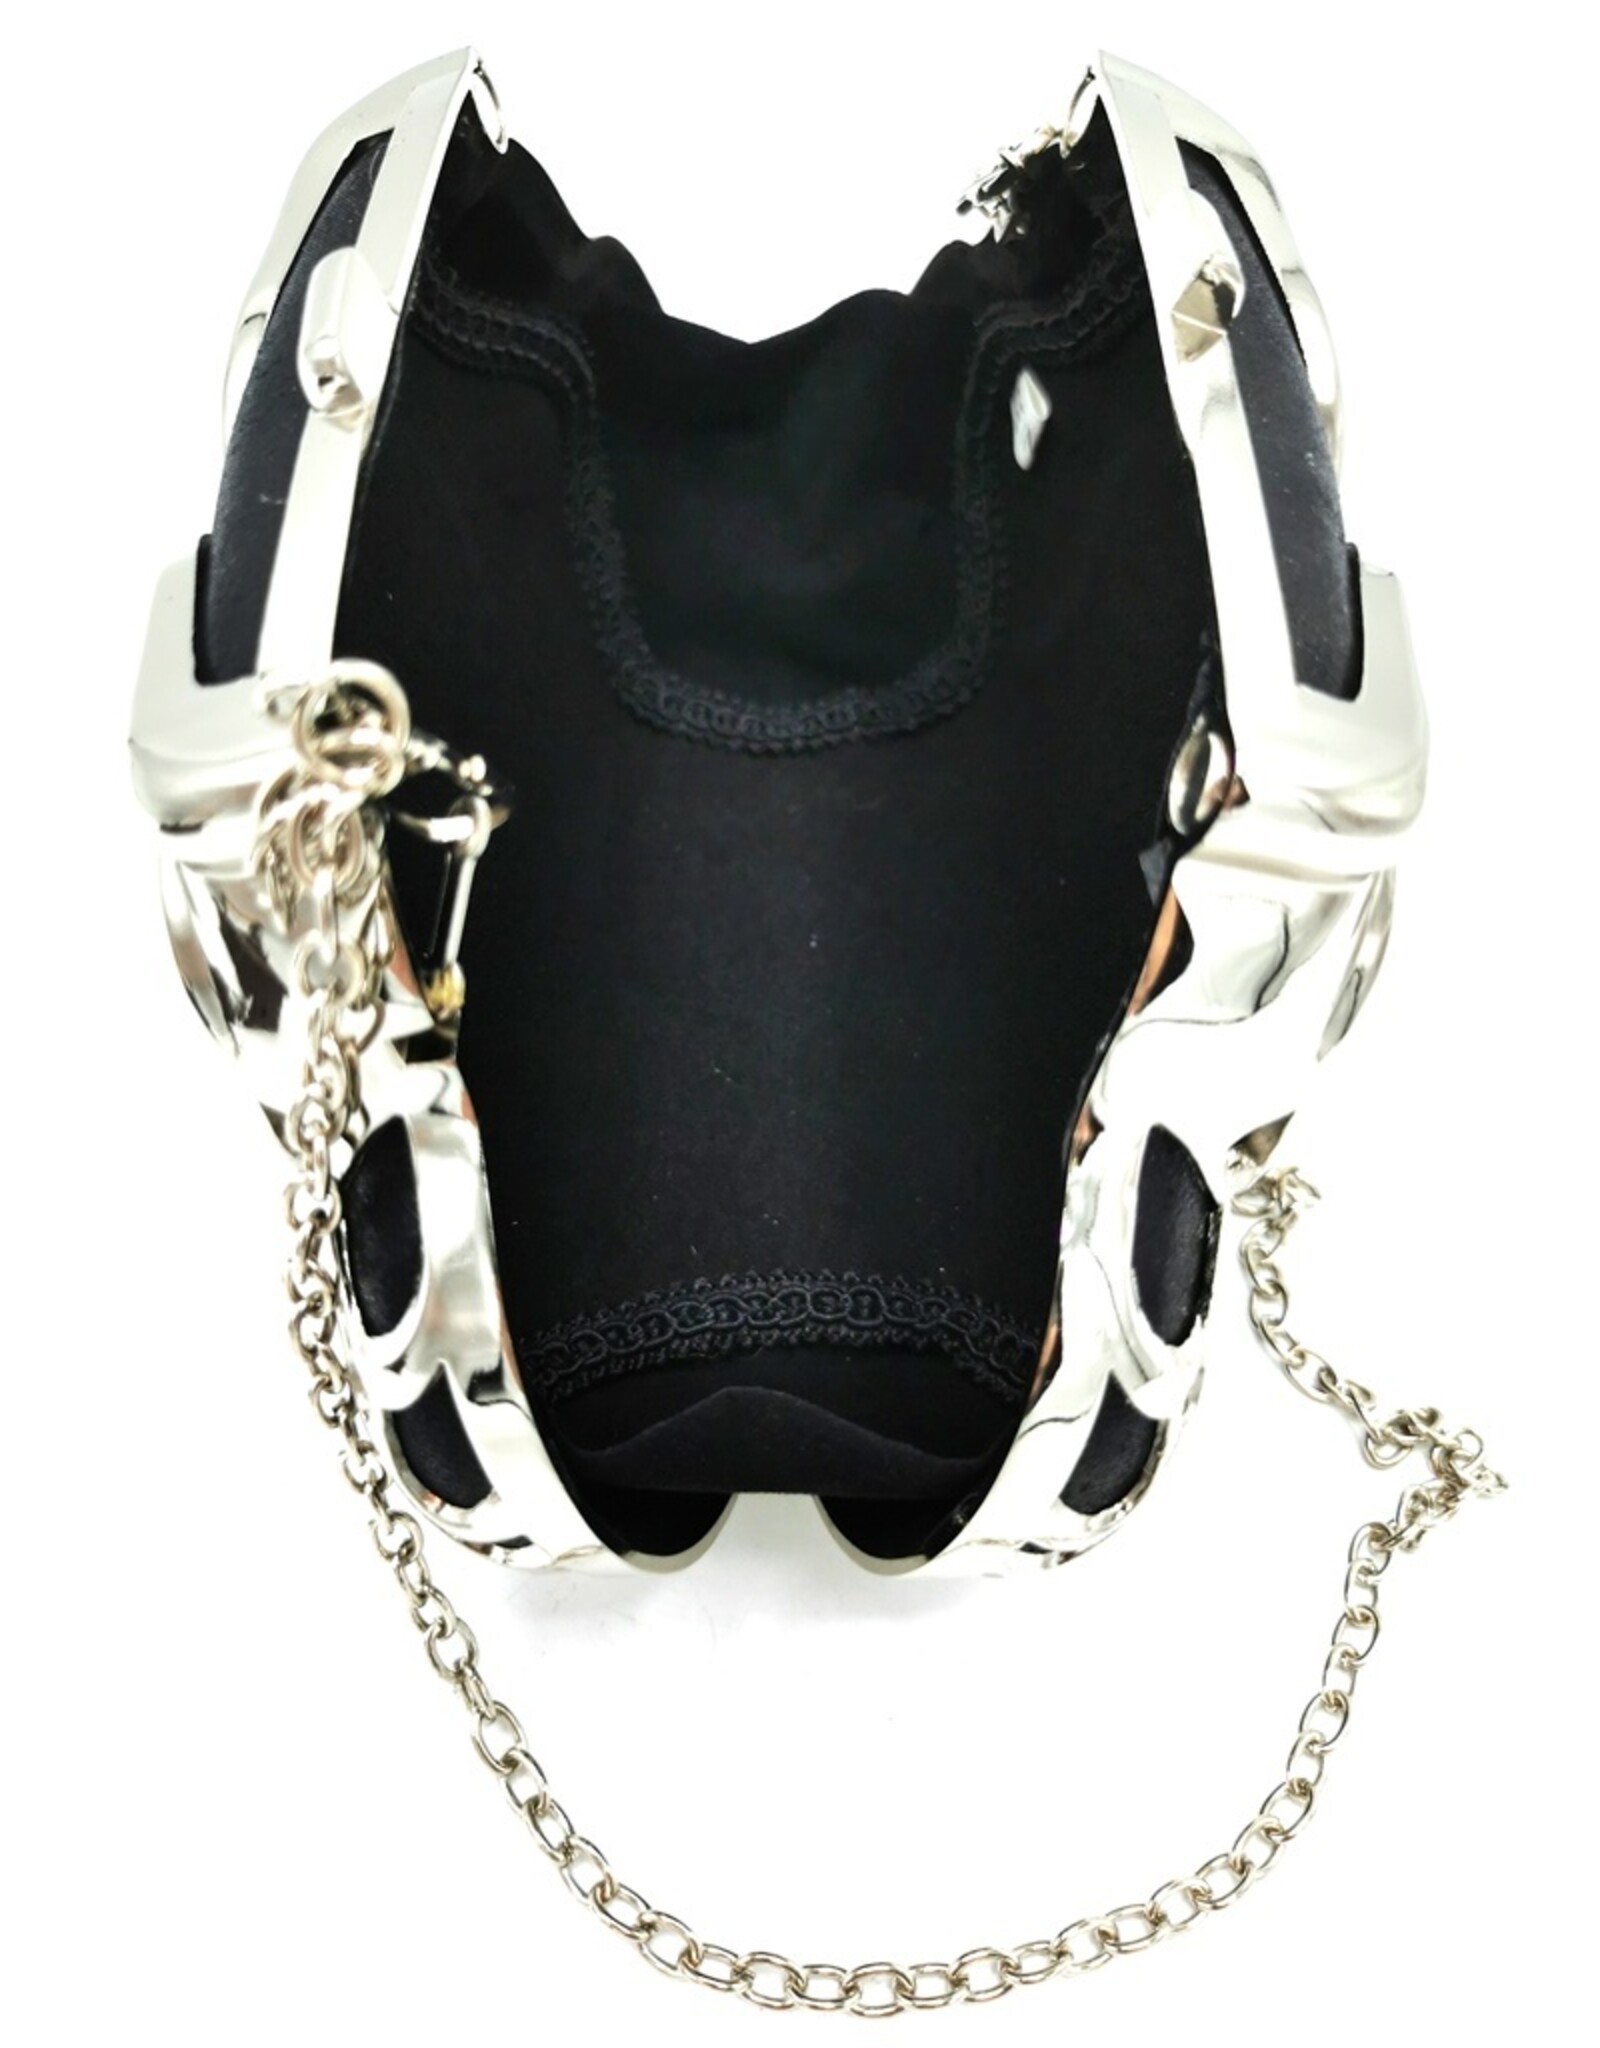 Trukado Fantasy bags and wallets - Owl shoulder bag/clutch/evening bag